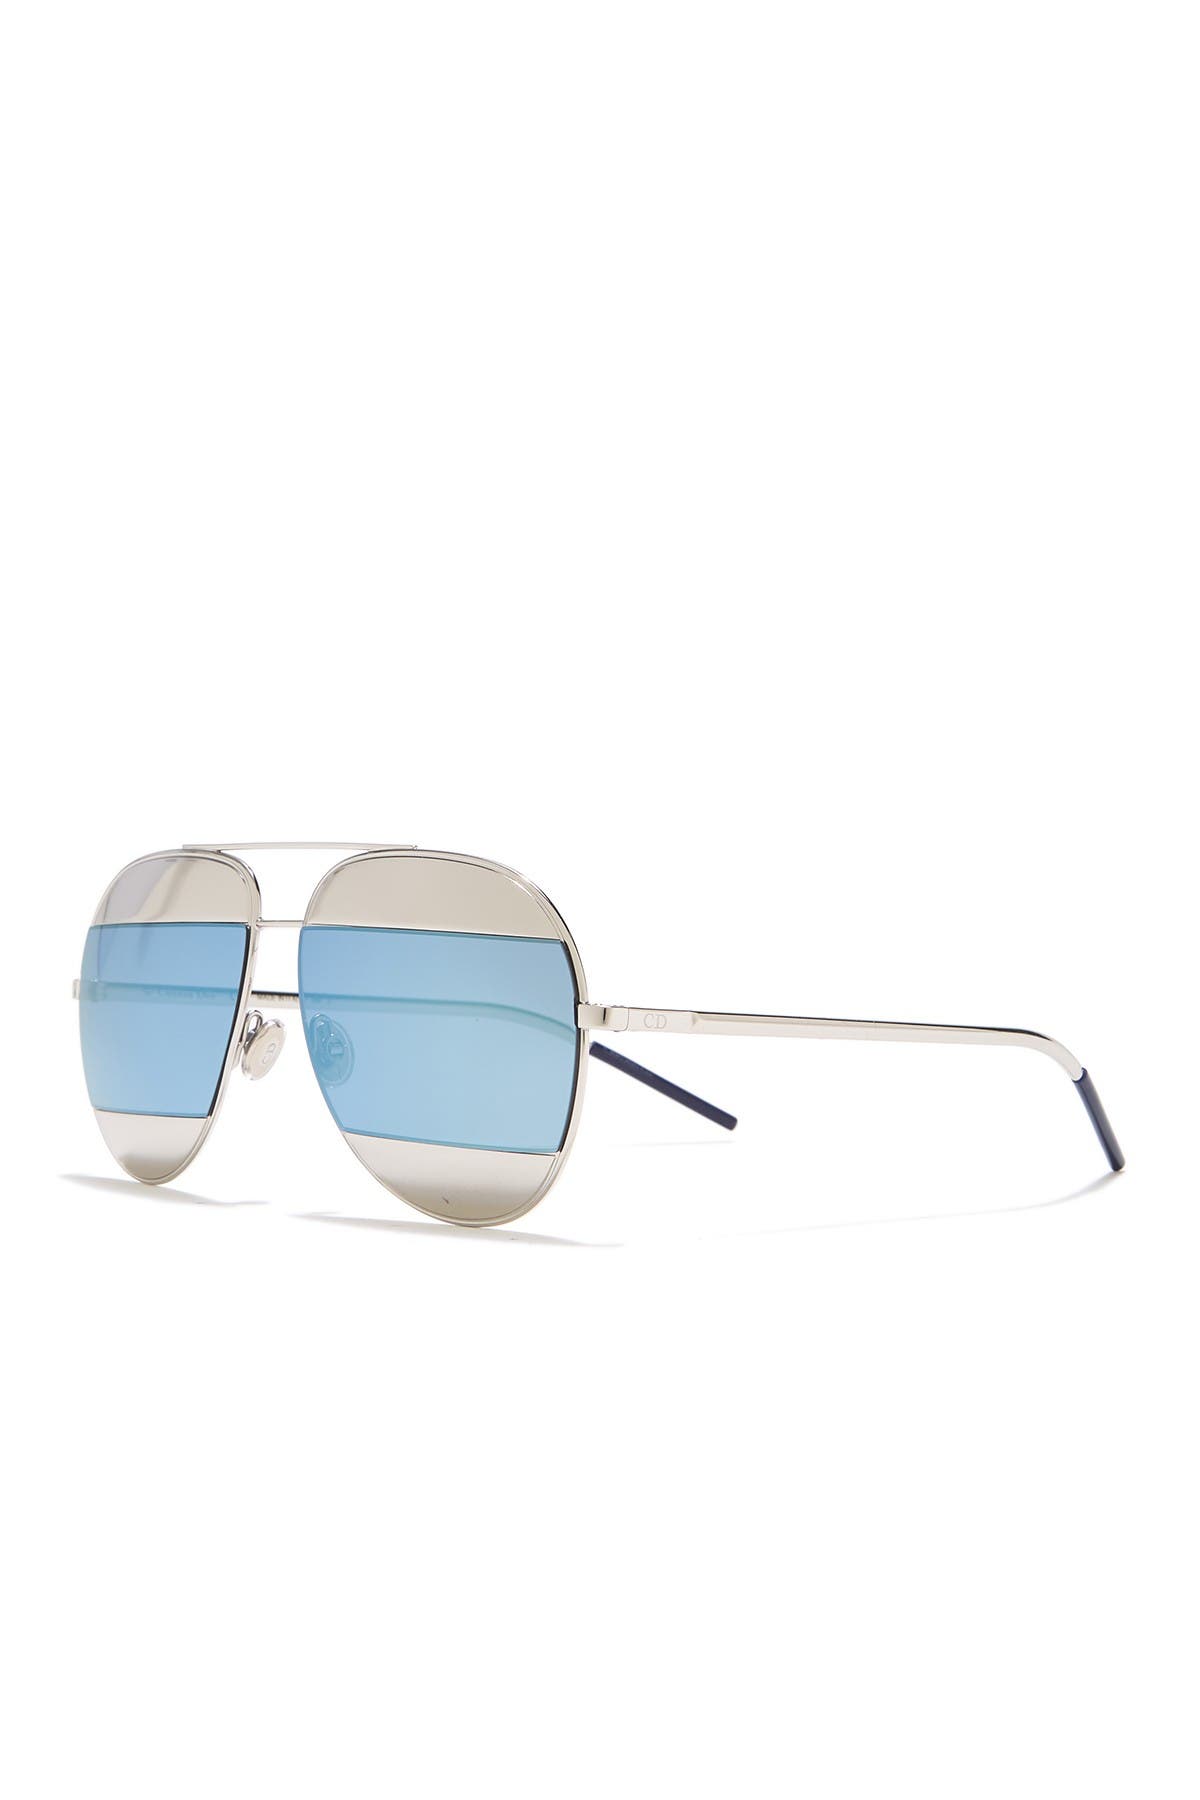 dior split 59mm metal aviator sunglasses